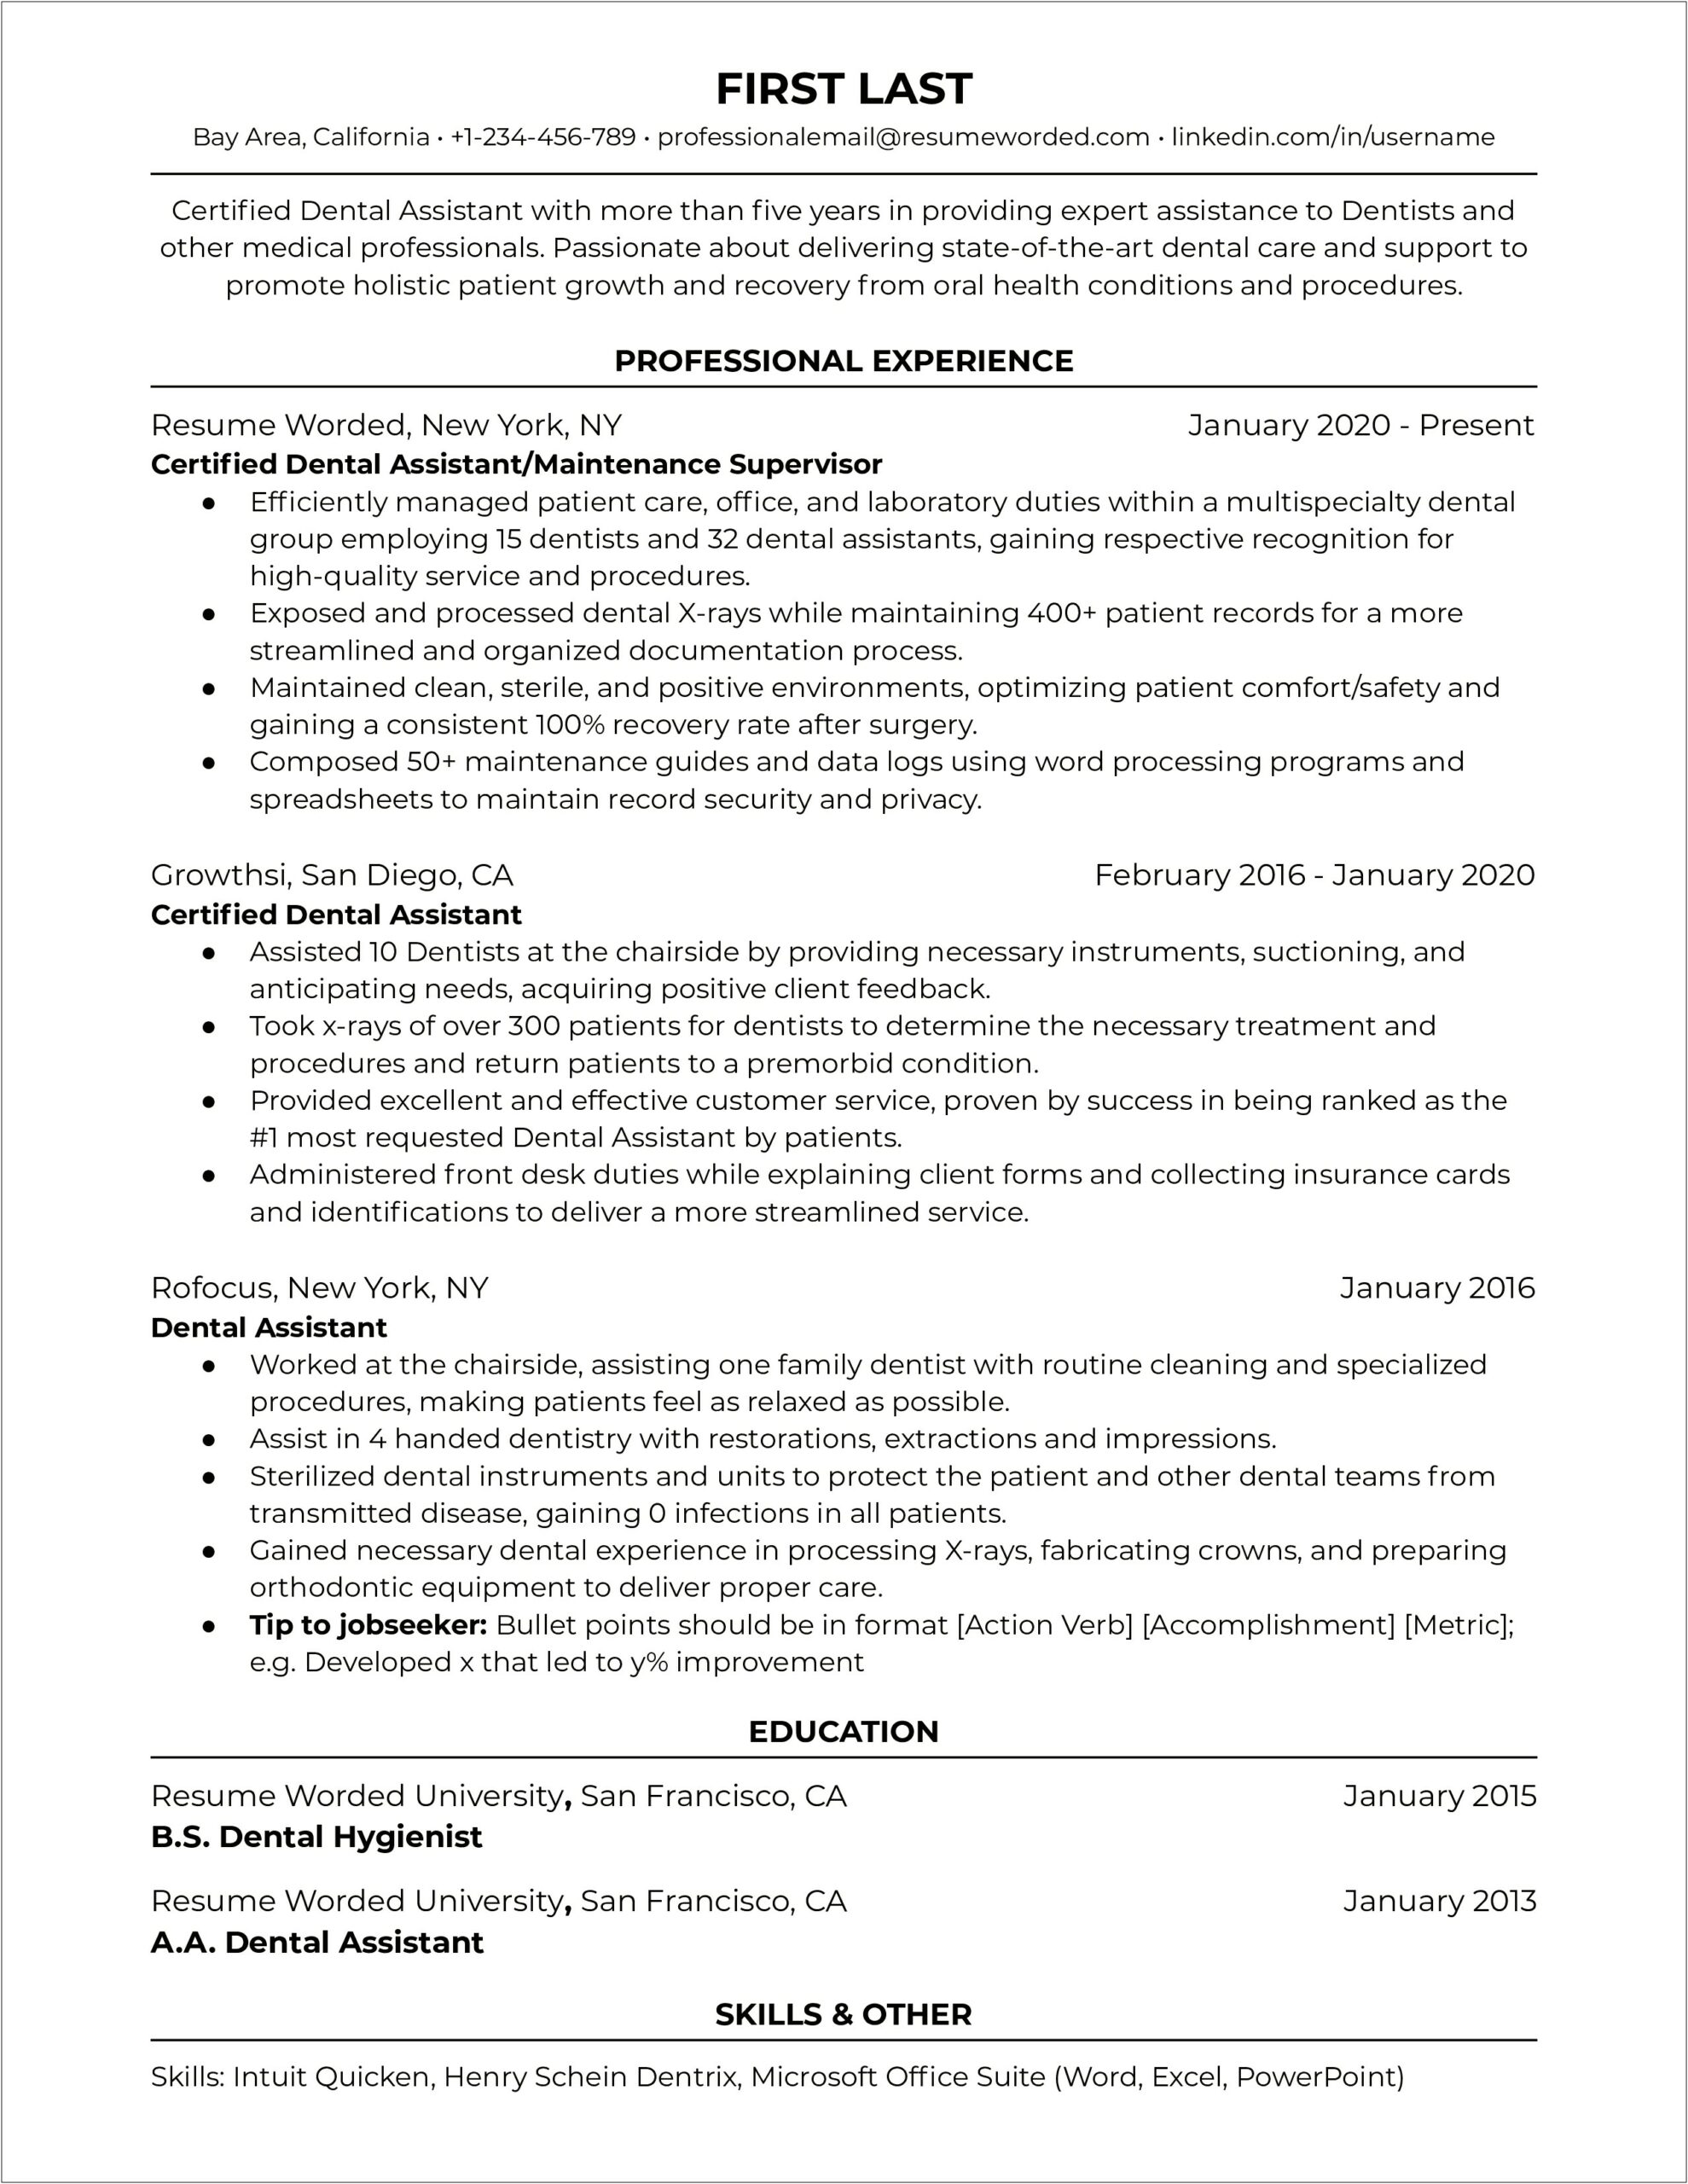 Sample Resume Cover Letter For Dental Assistant